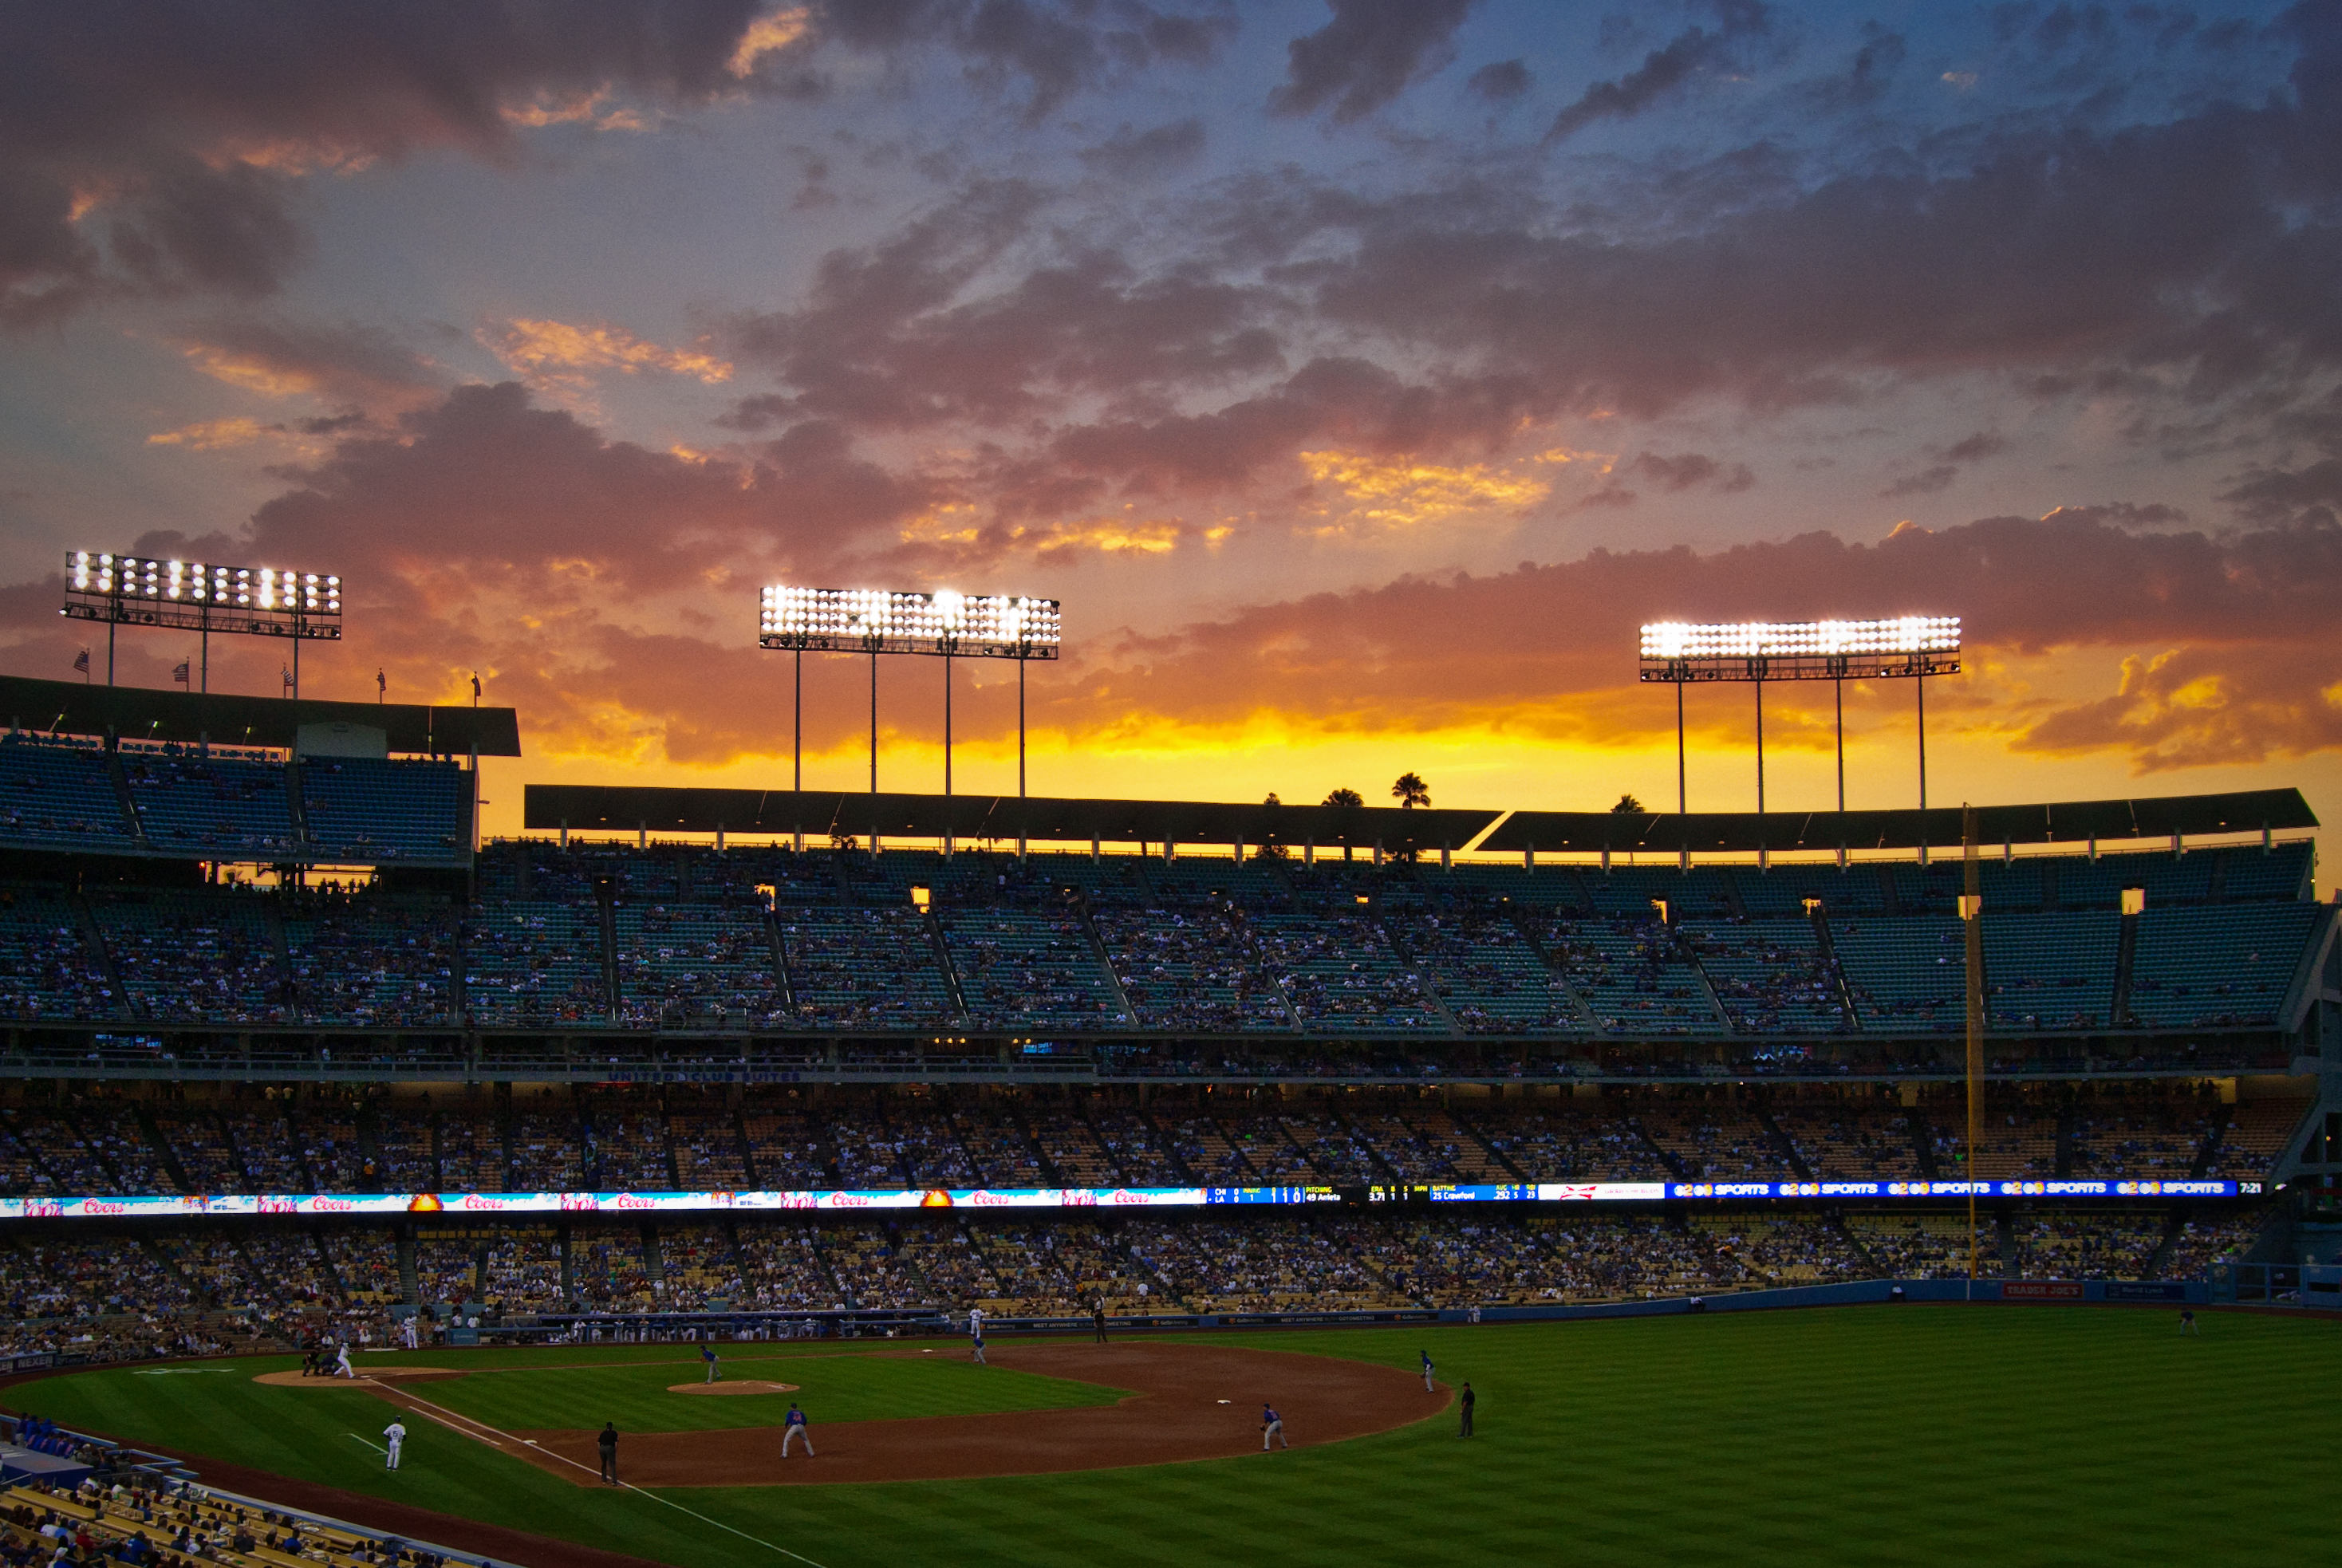 26-AUG-2013: The sunset of the season at Dodger Stadium.